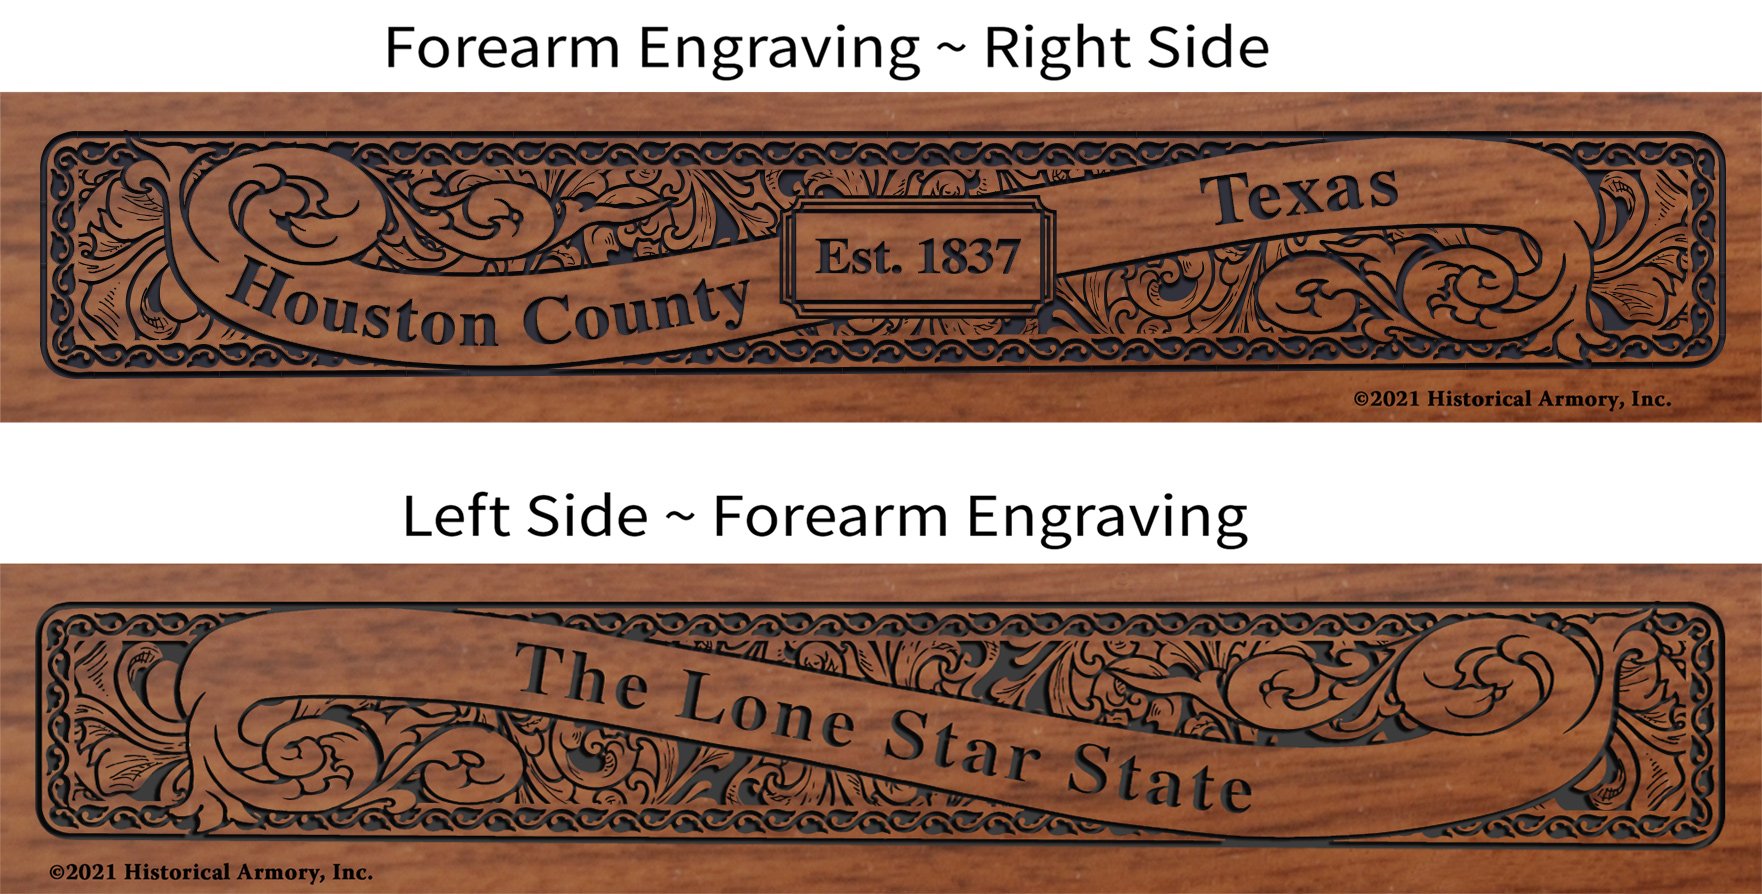 Houston County Texas Establishment and Motto History Engraved Rifle Forearm